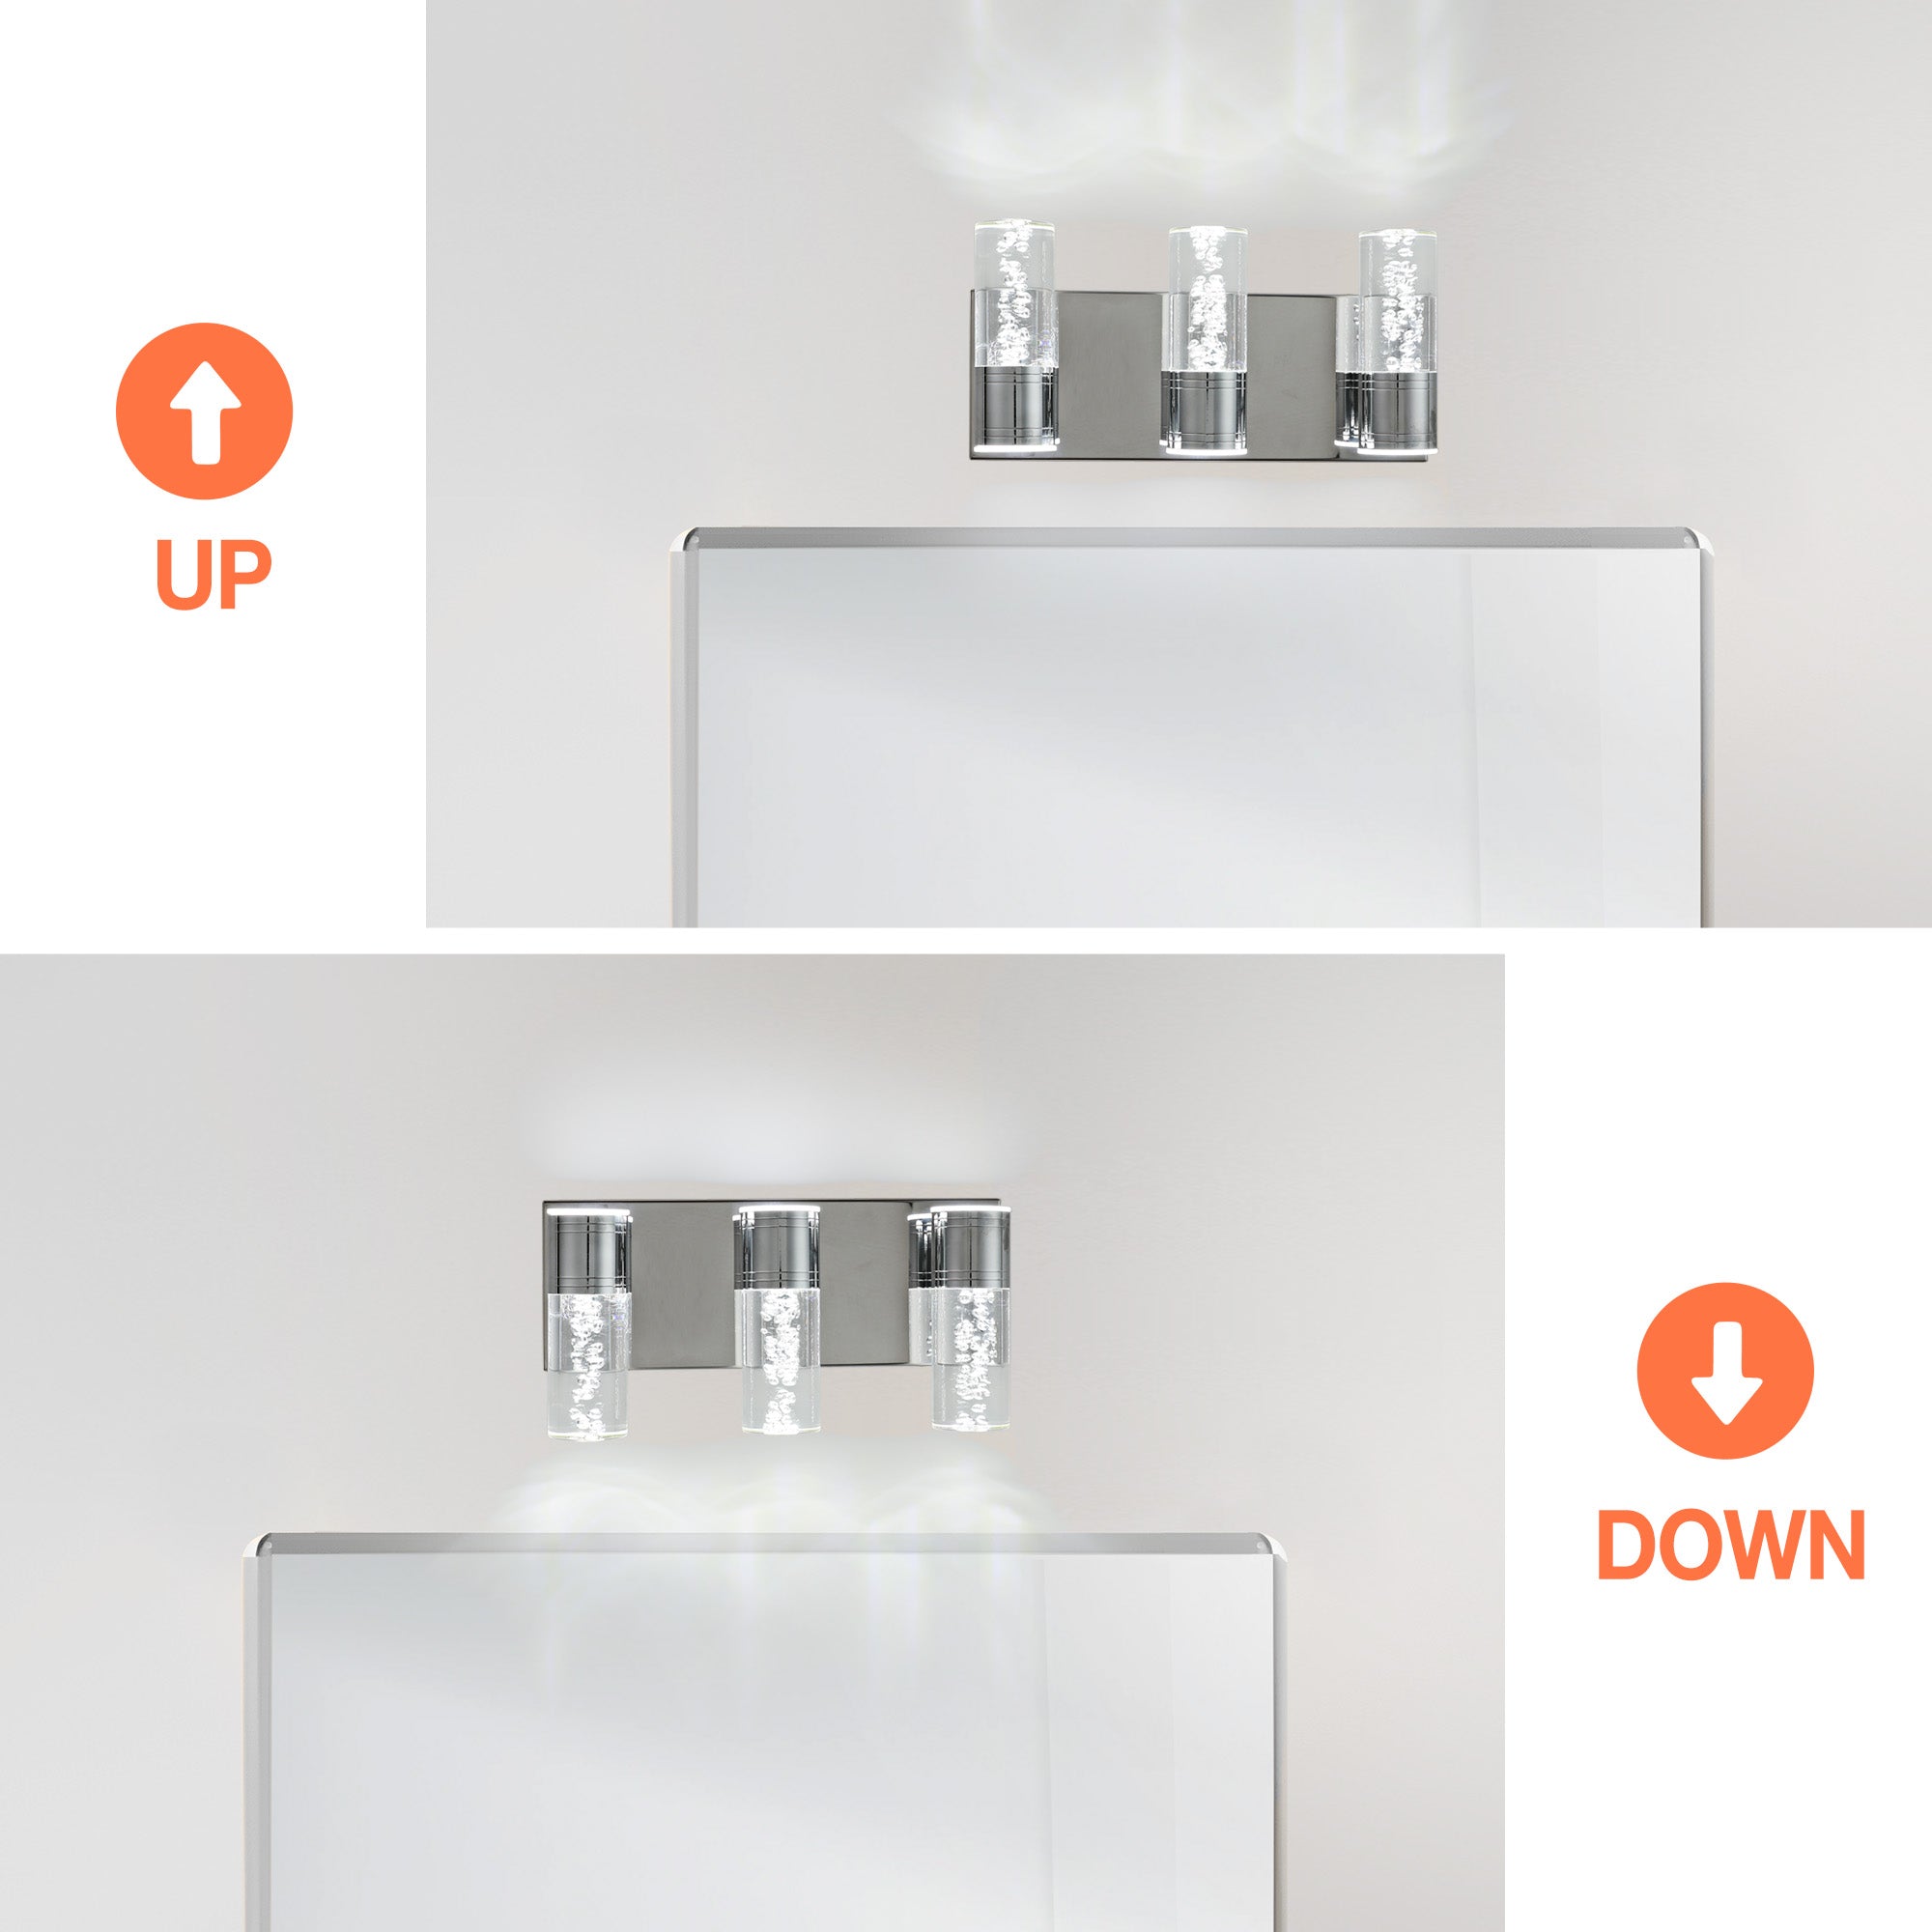 3-Light Crystal Bubble Glass Bathroom Light Fixtures, 4000K, Chrome,High Transparency Glass CL013